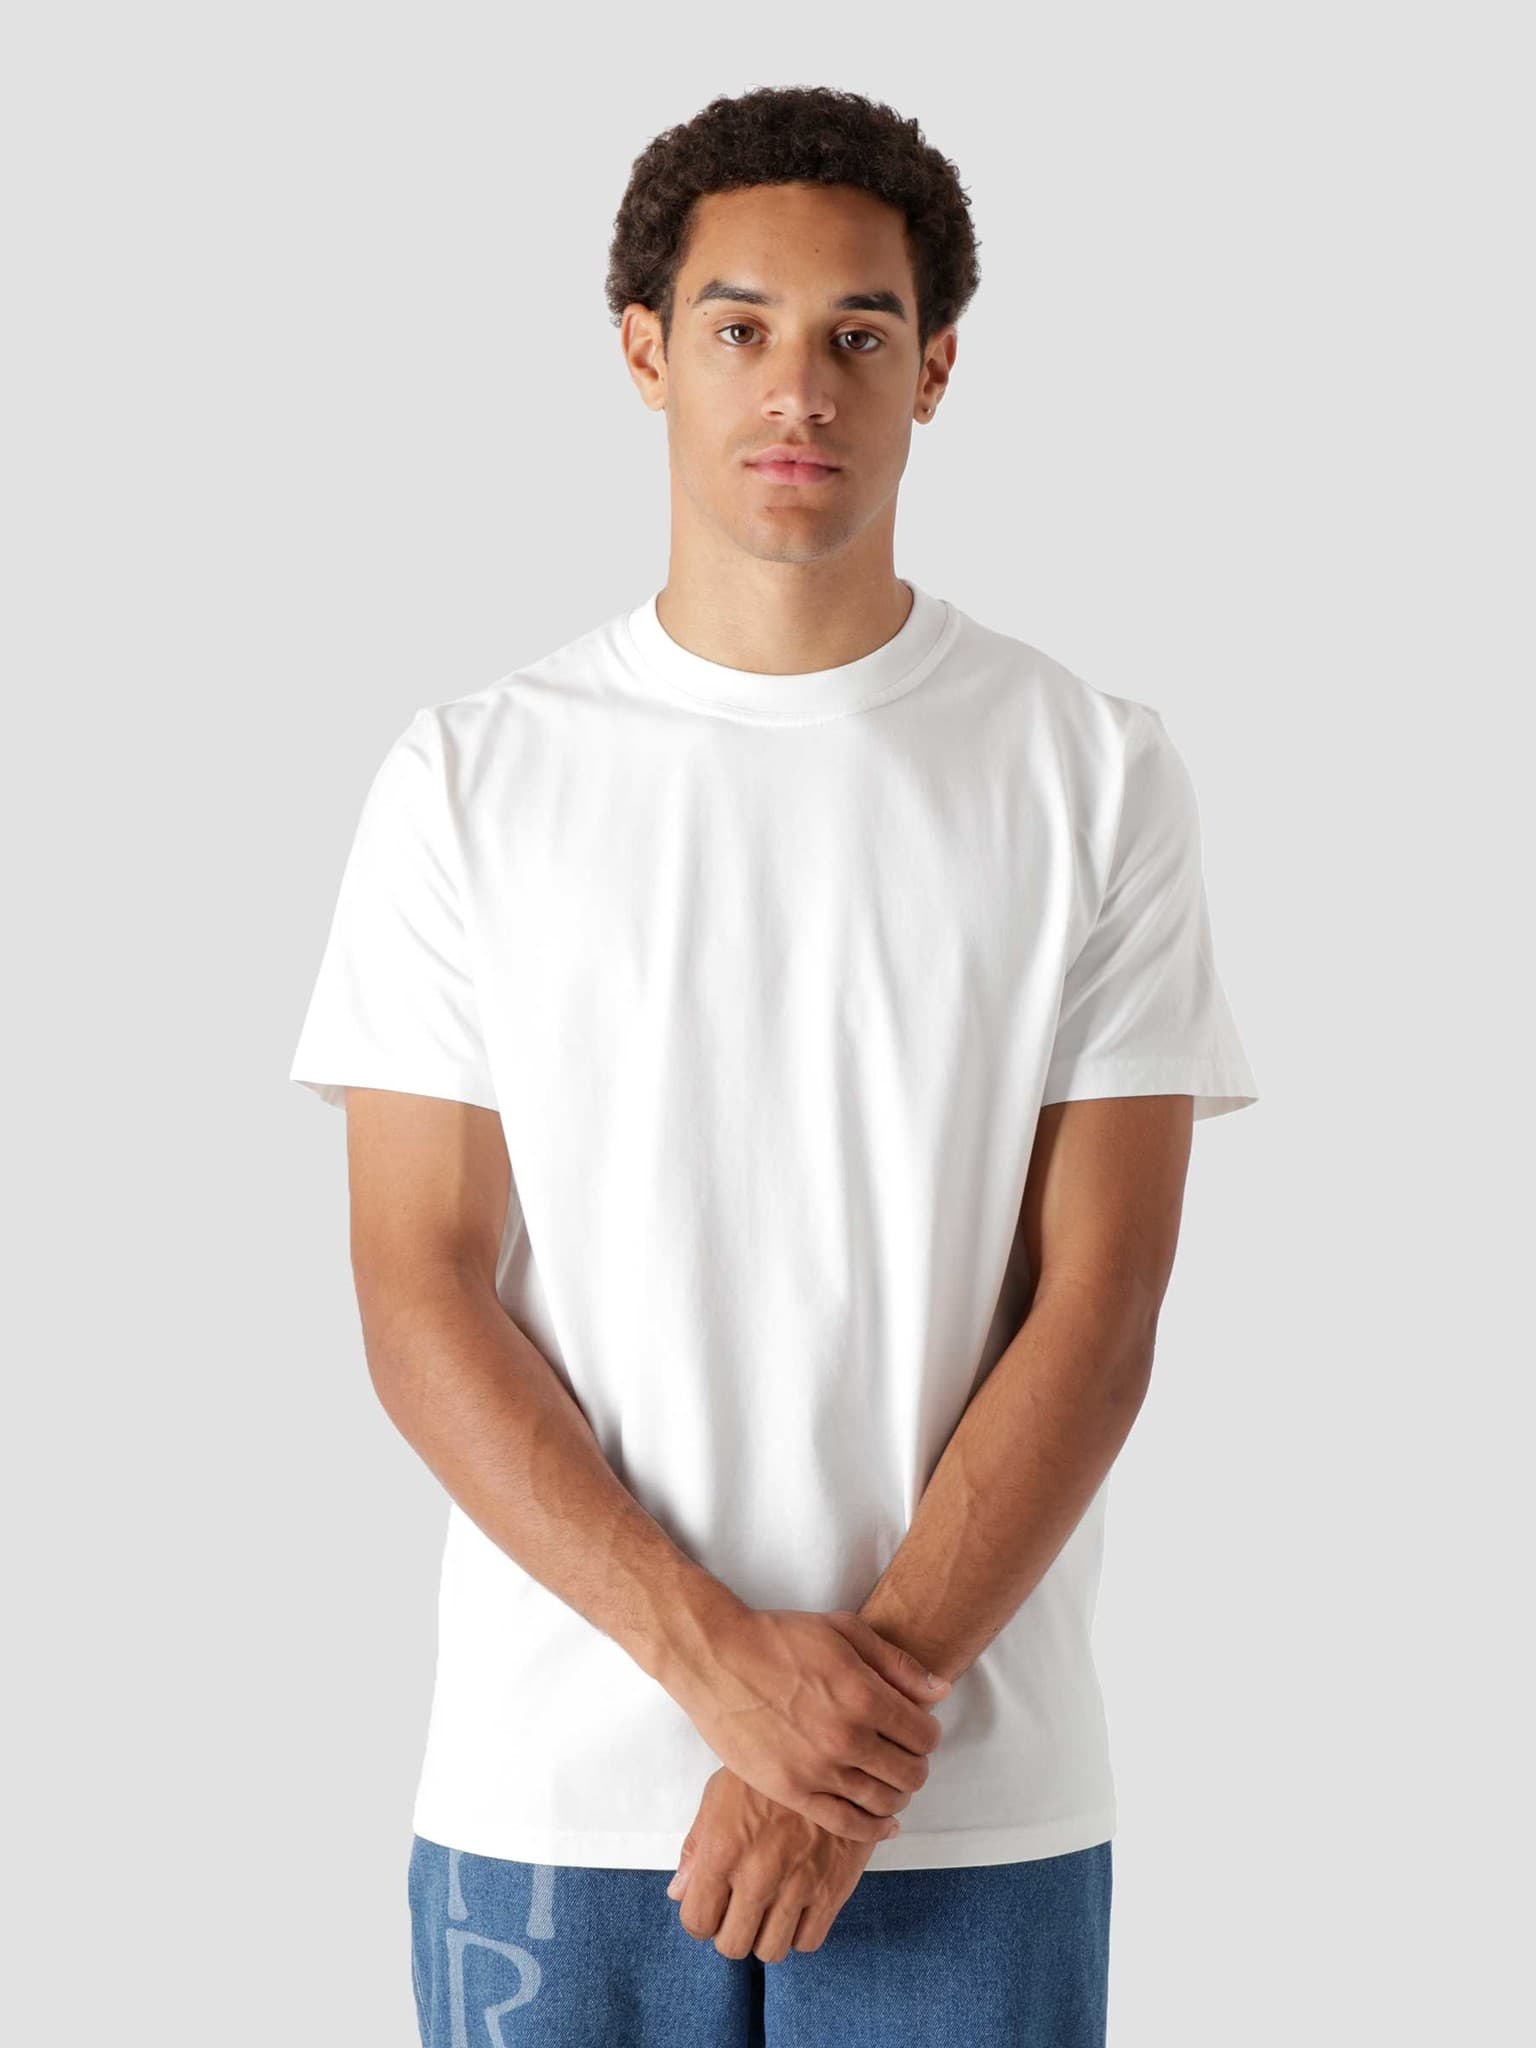 Tissot Back Multi Logo T-Shirt White AW21-073T